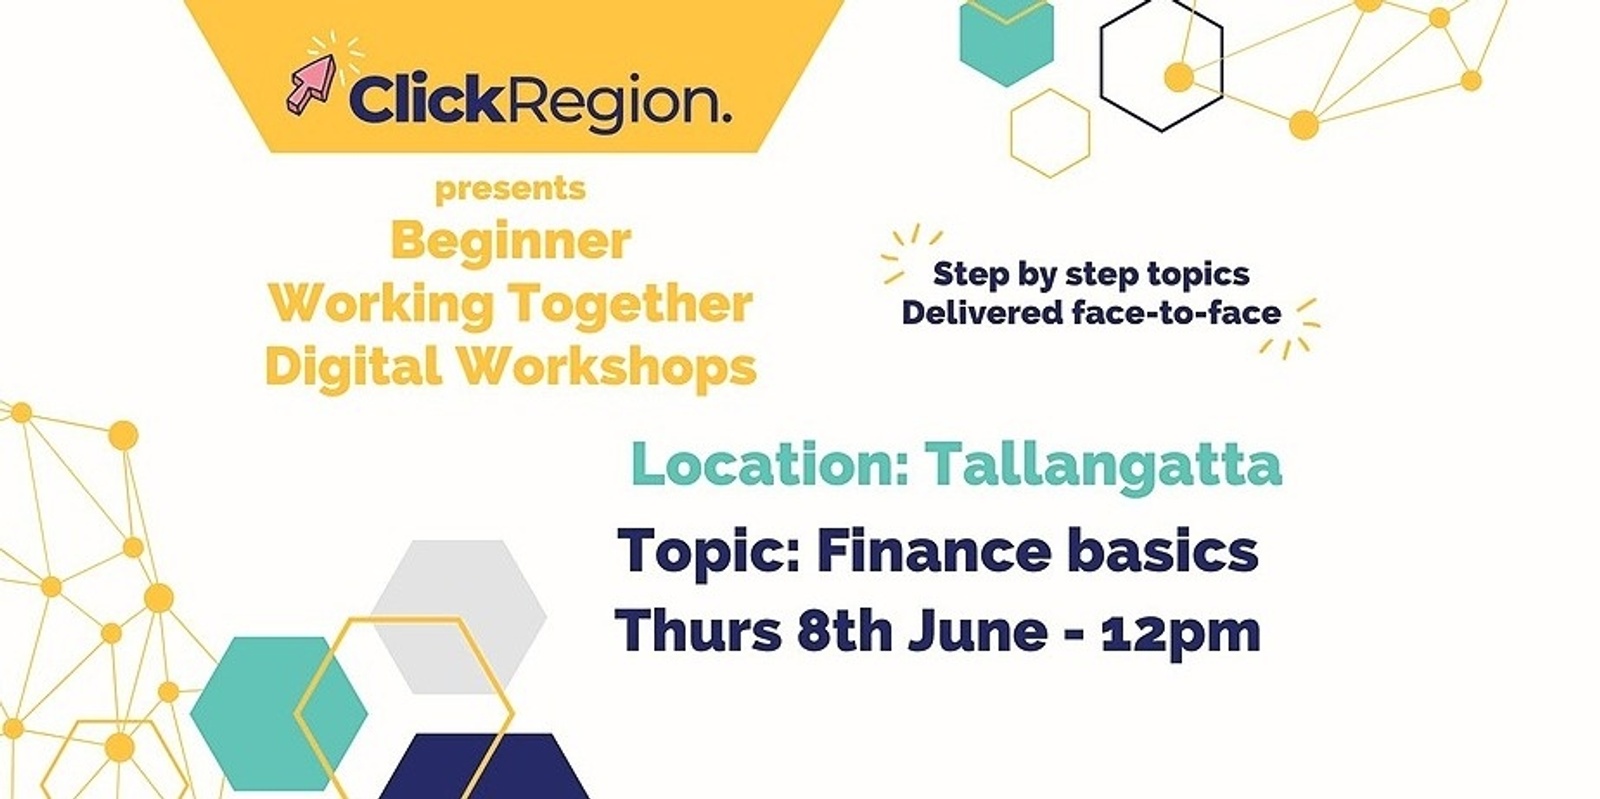 Tallangatta Workshop, Finance basics - Working Together Program